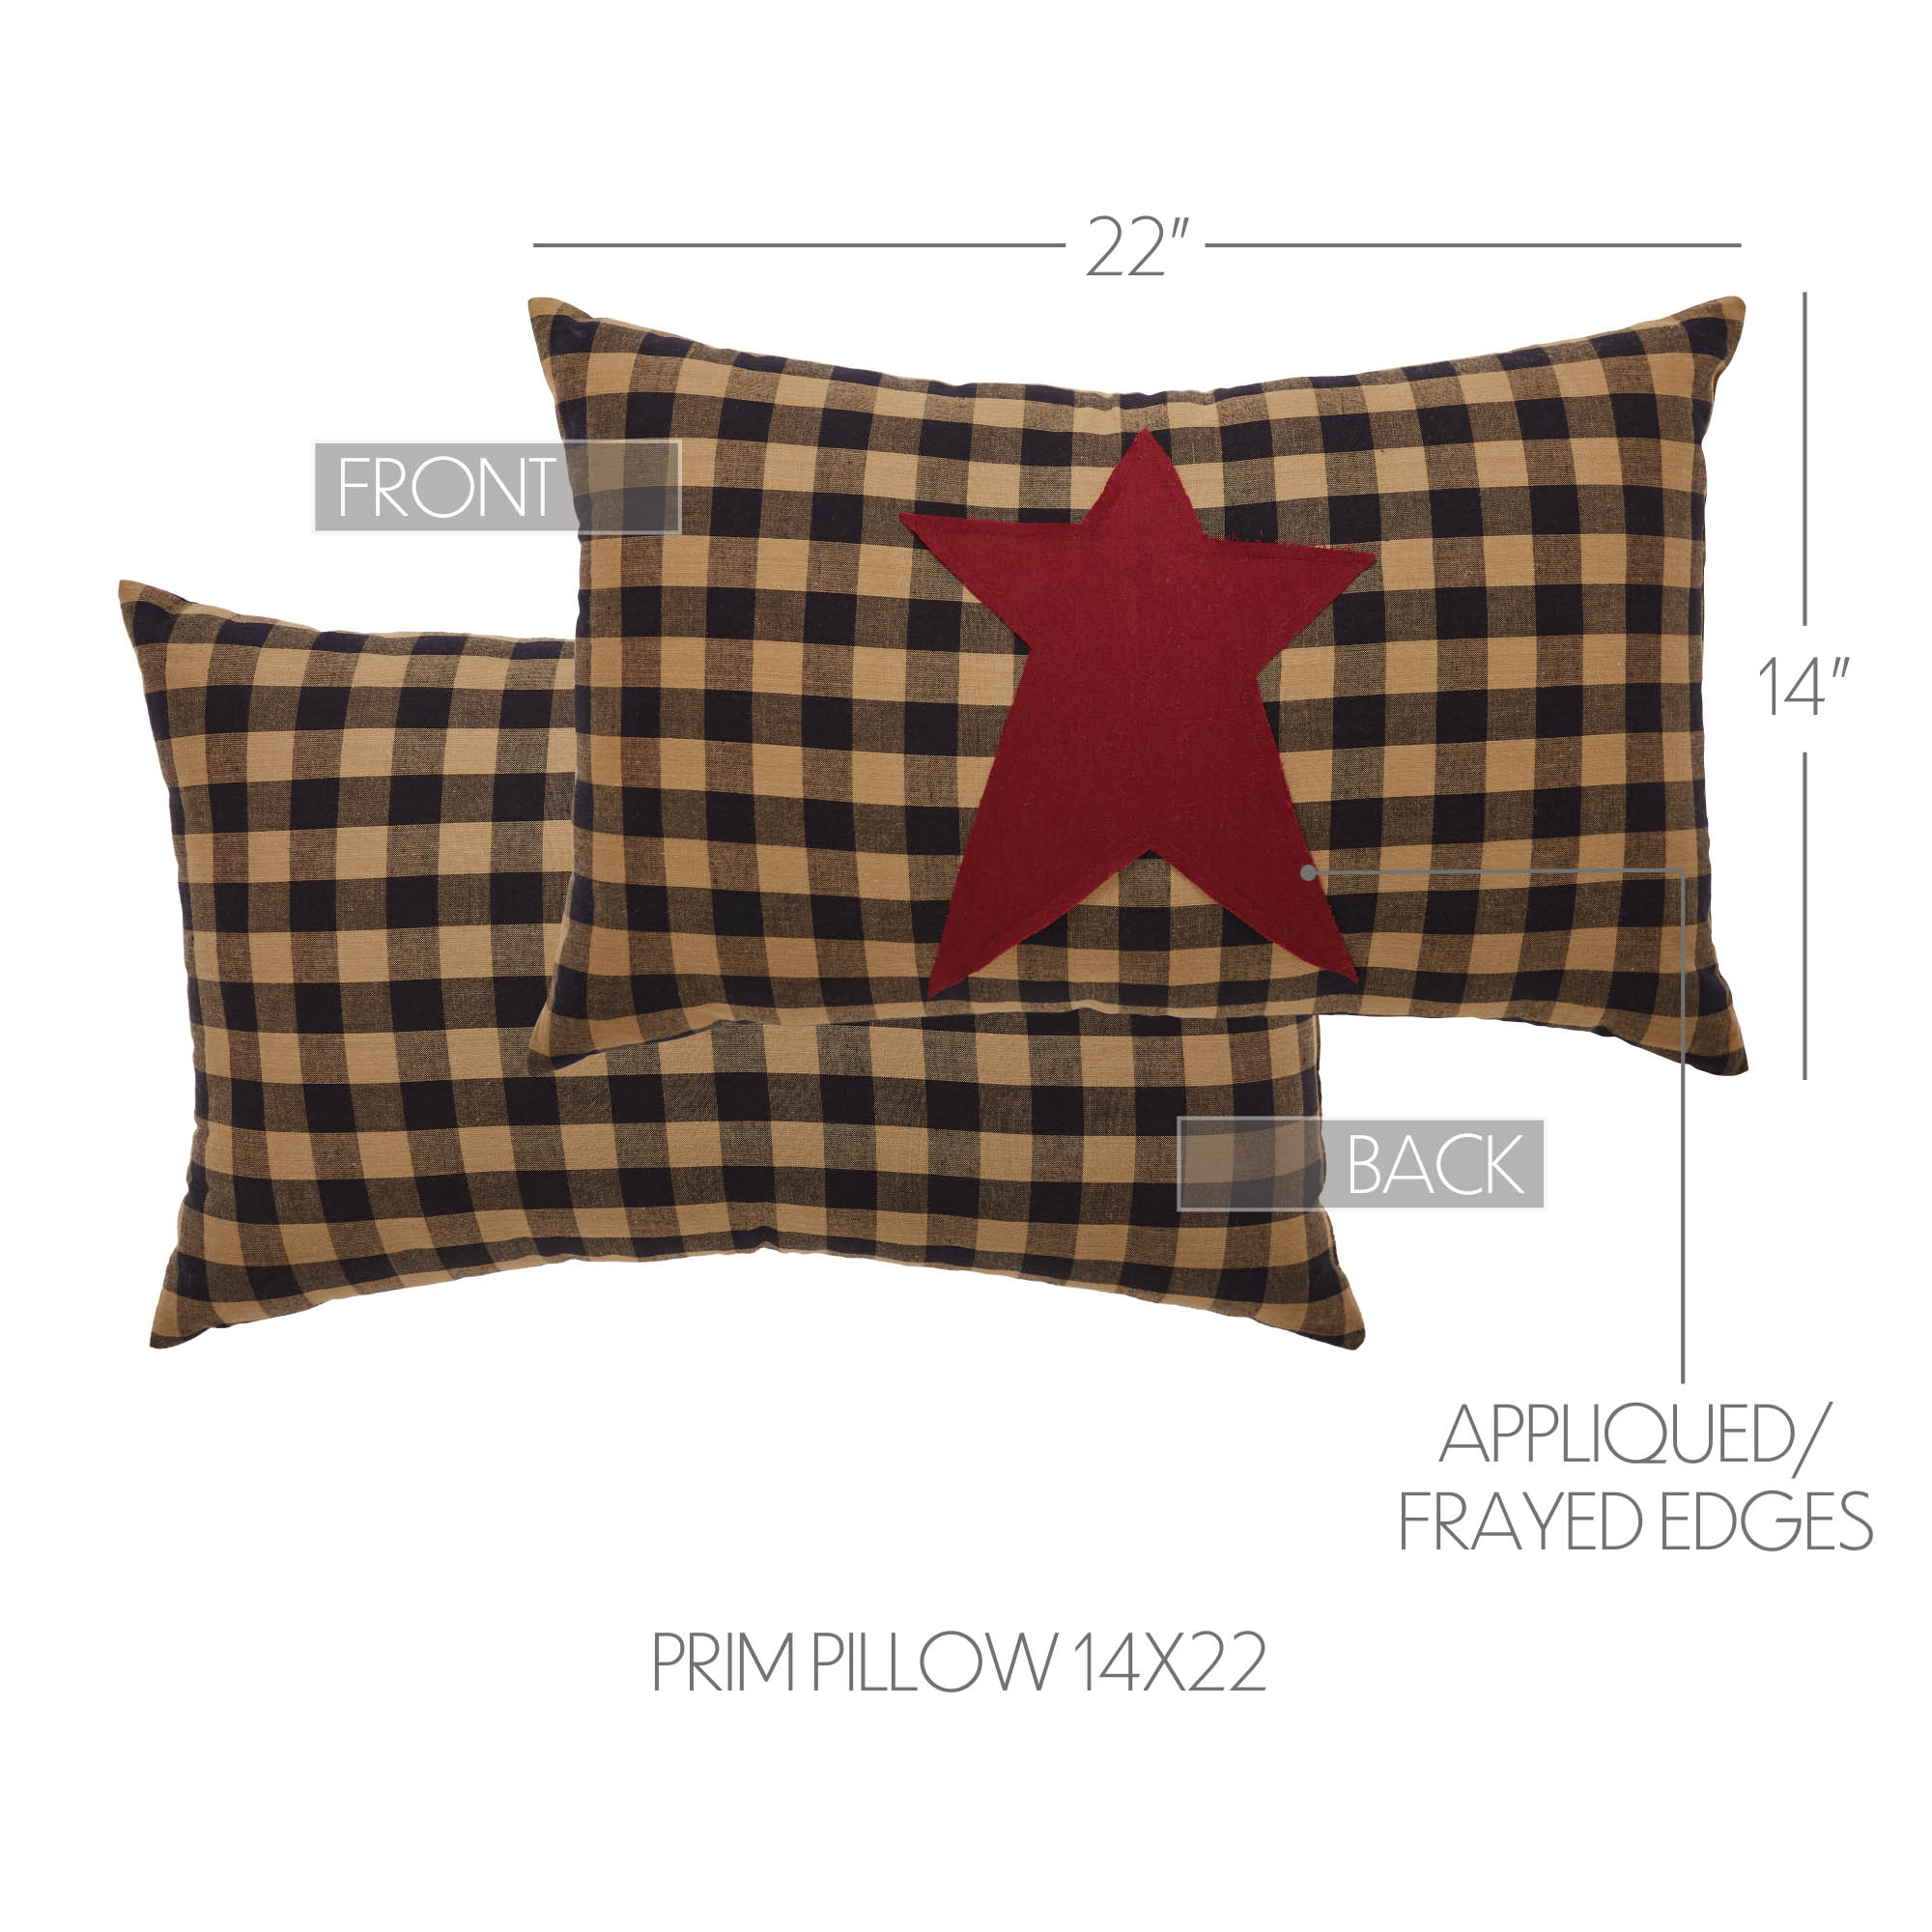 Connell Prim Pillow 14x22 - 84411